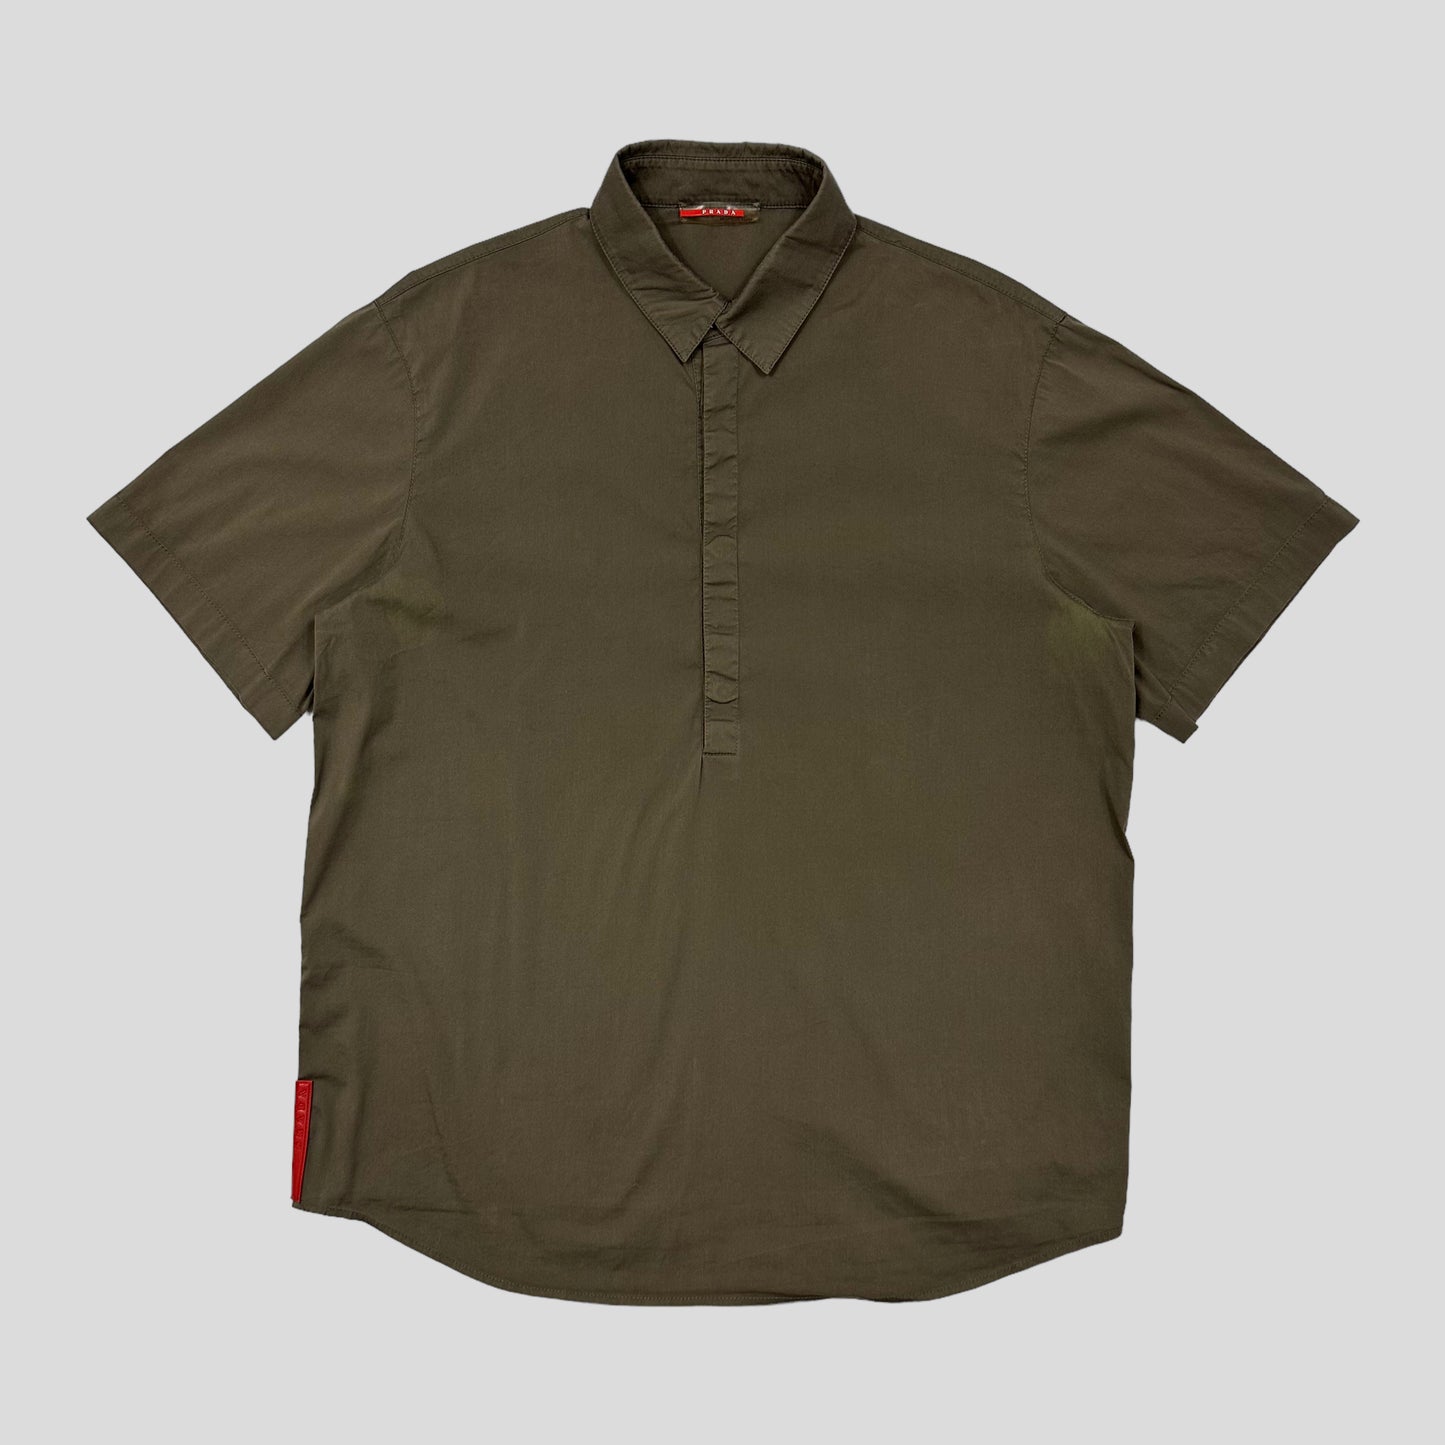 Prada Sport early 00’s Co-Nylon 1/2 Button Shirt - M/L